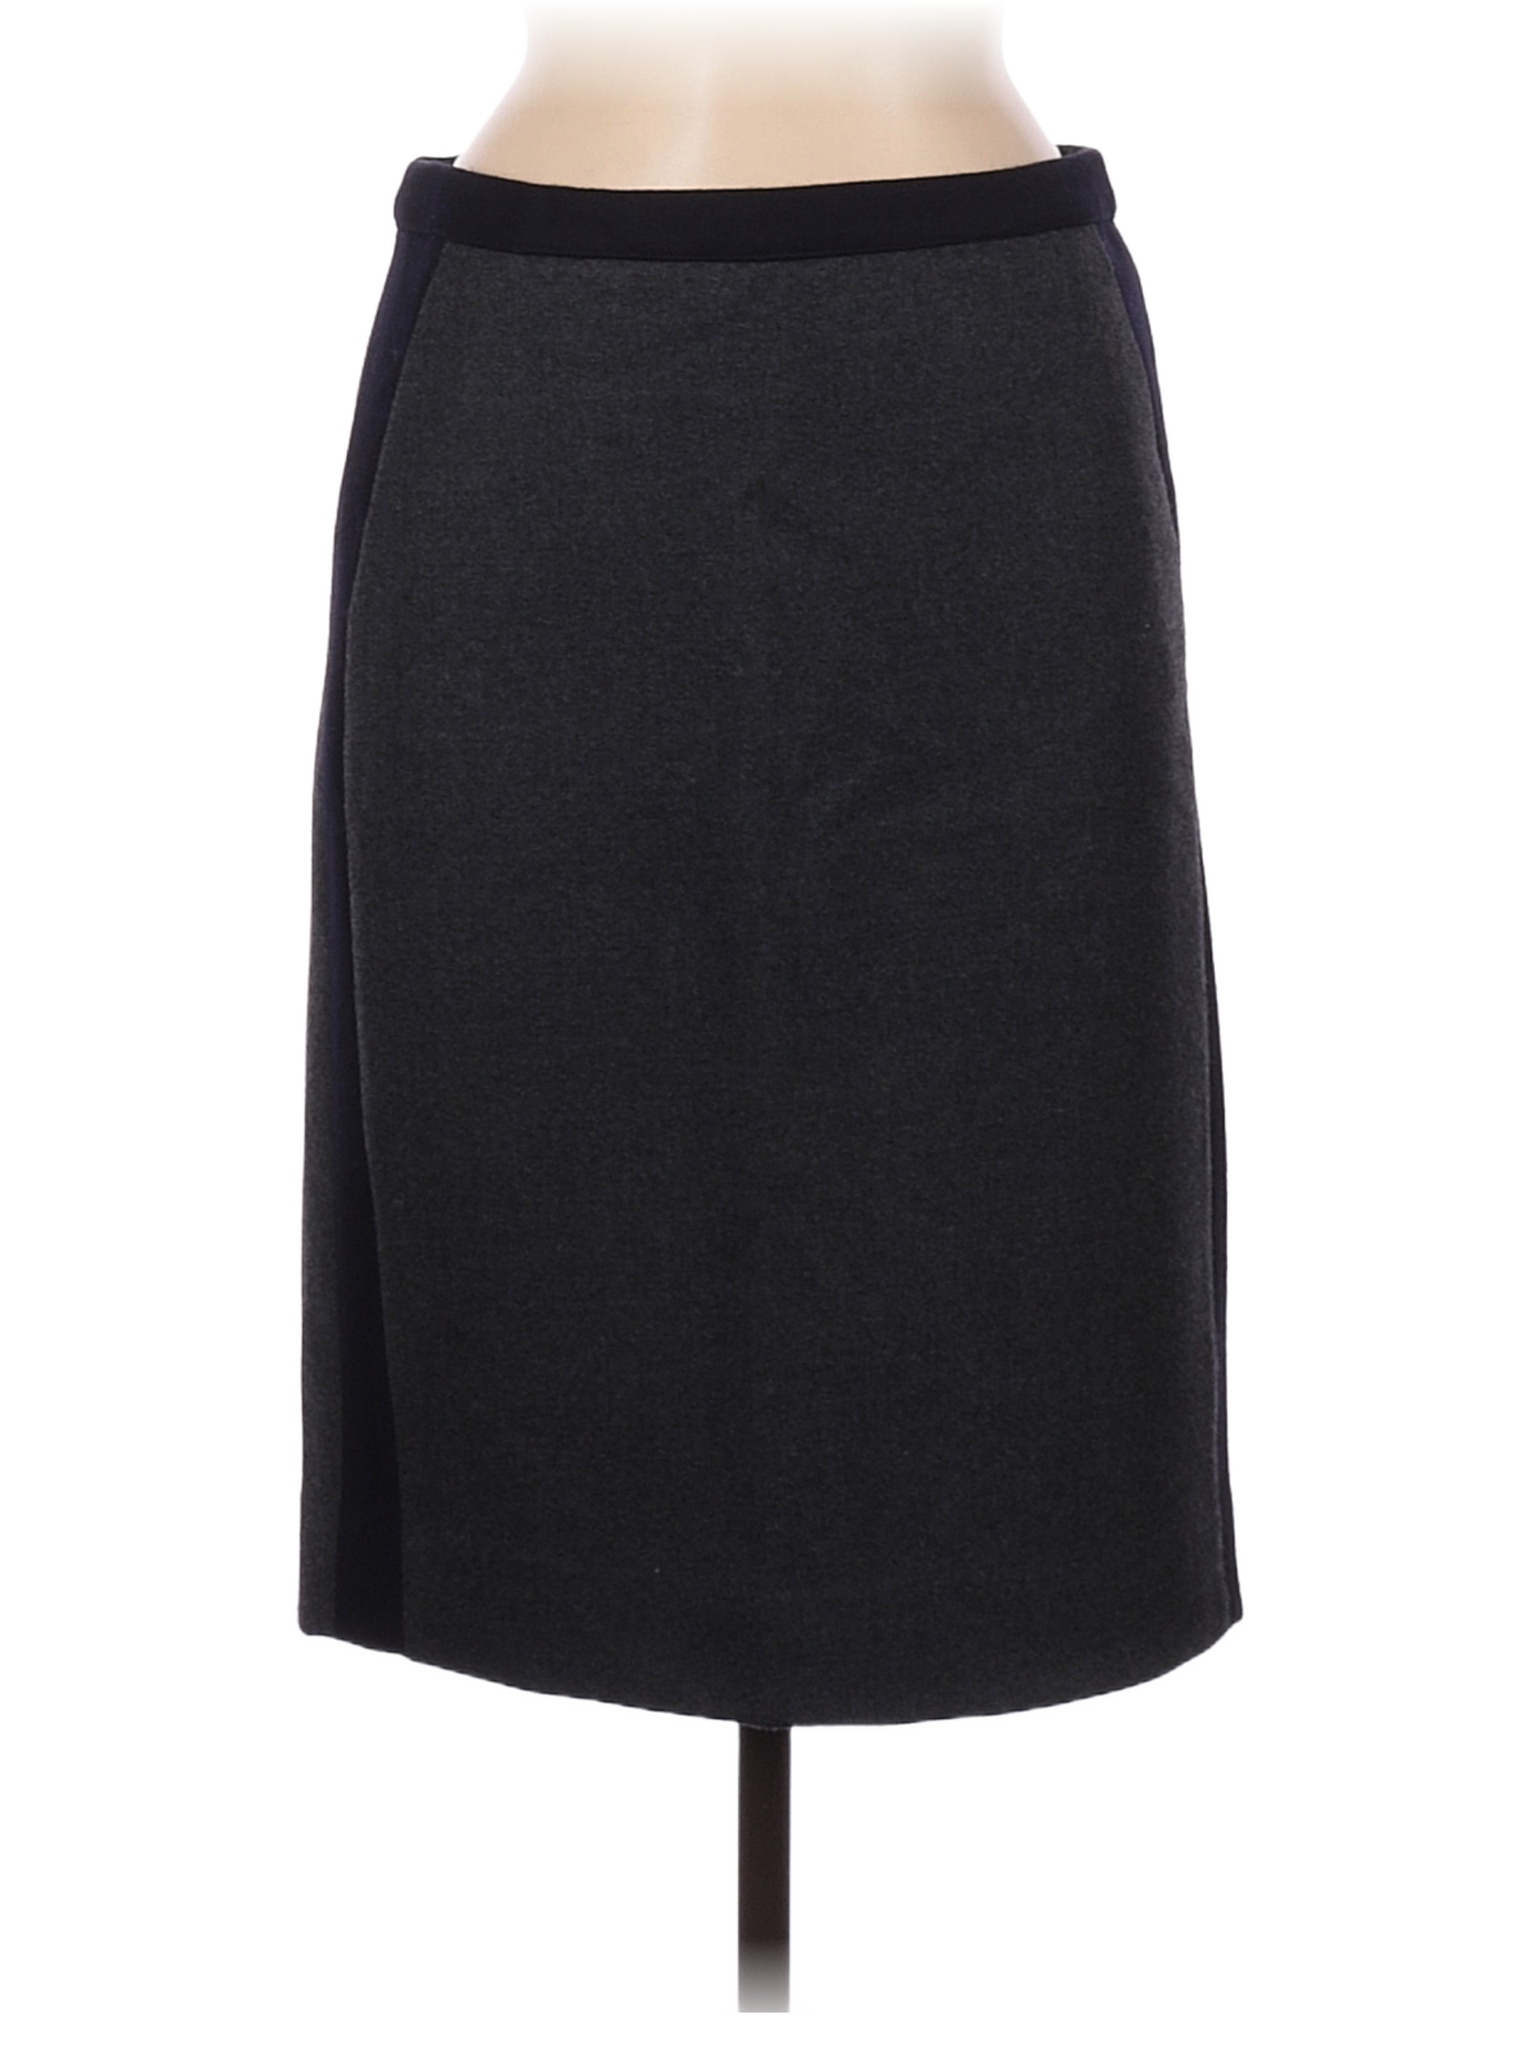 J.Crew 100% Wool Color Block Gray Wool Skirt Size 6 - 90% off | thredUP